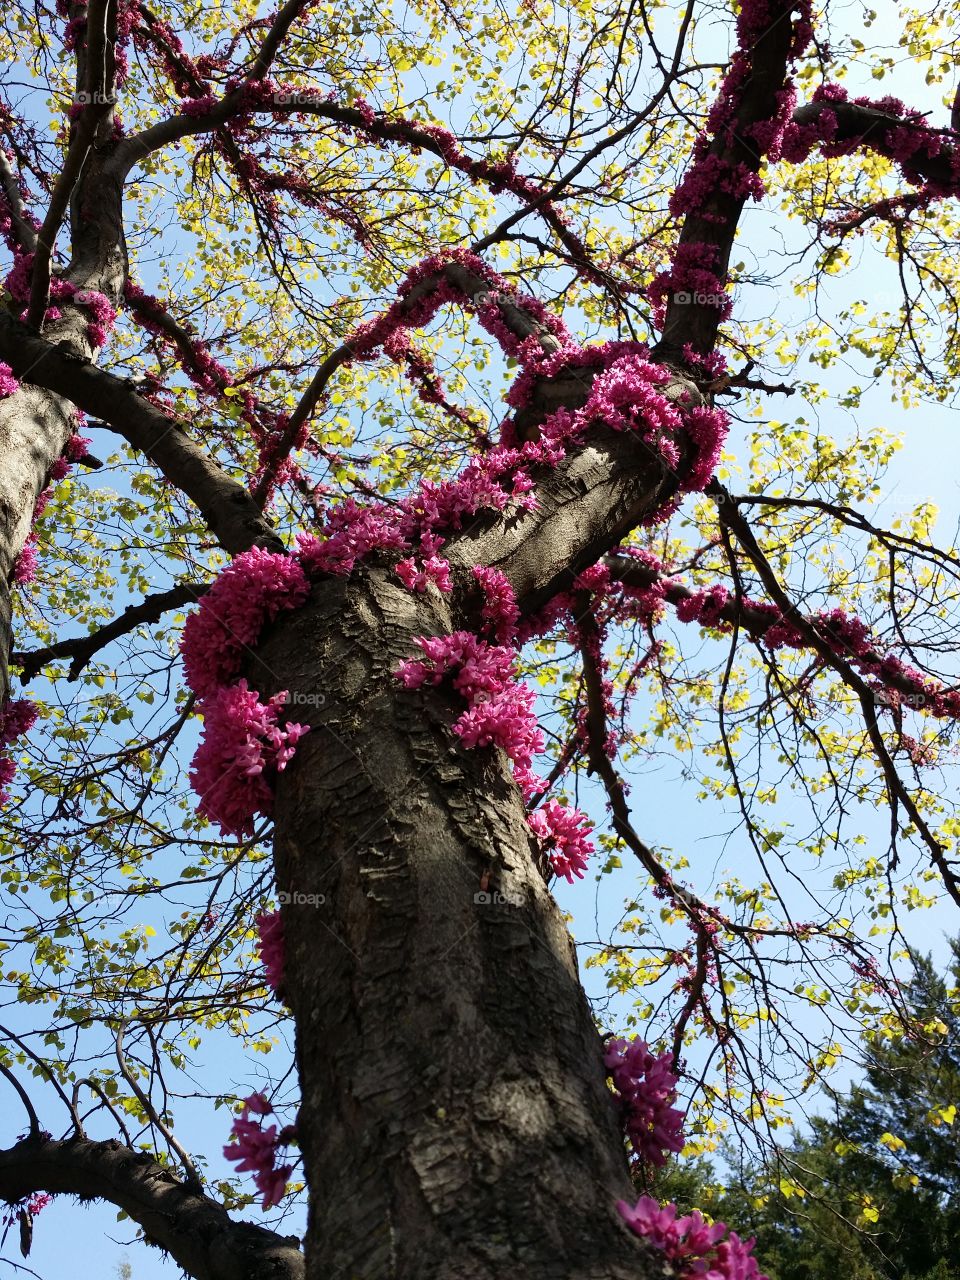 Stately Redbud tree in full bloom reaching for the spring sky